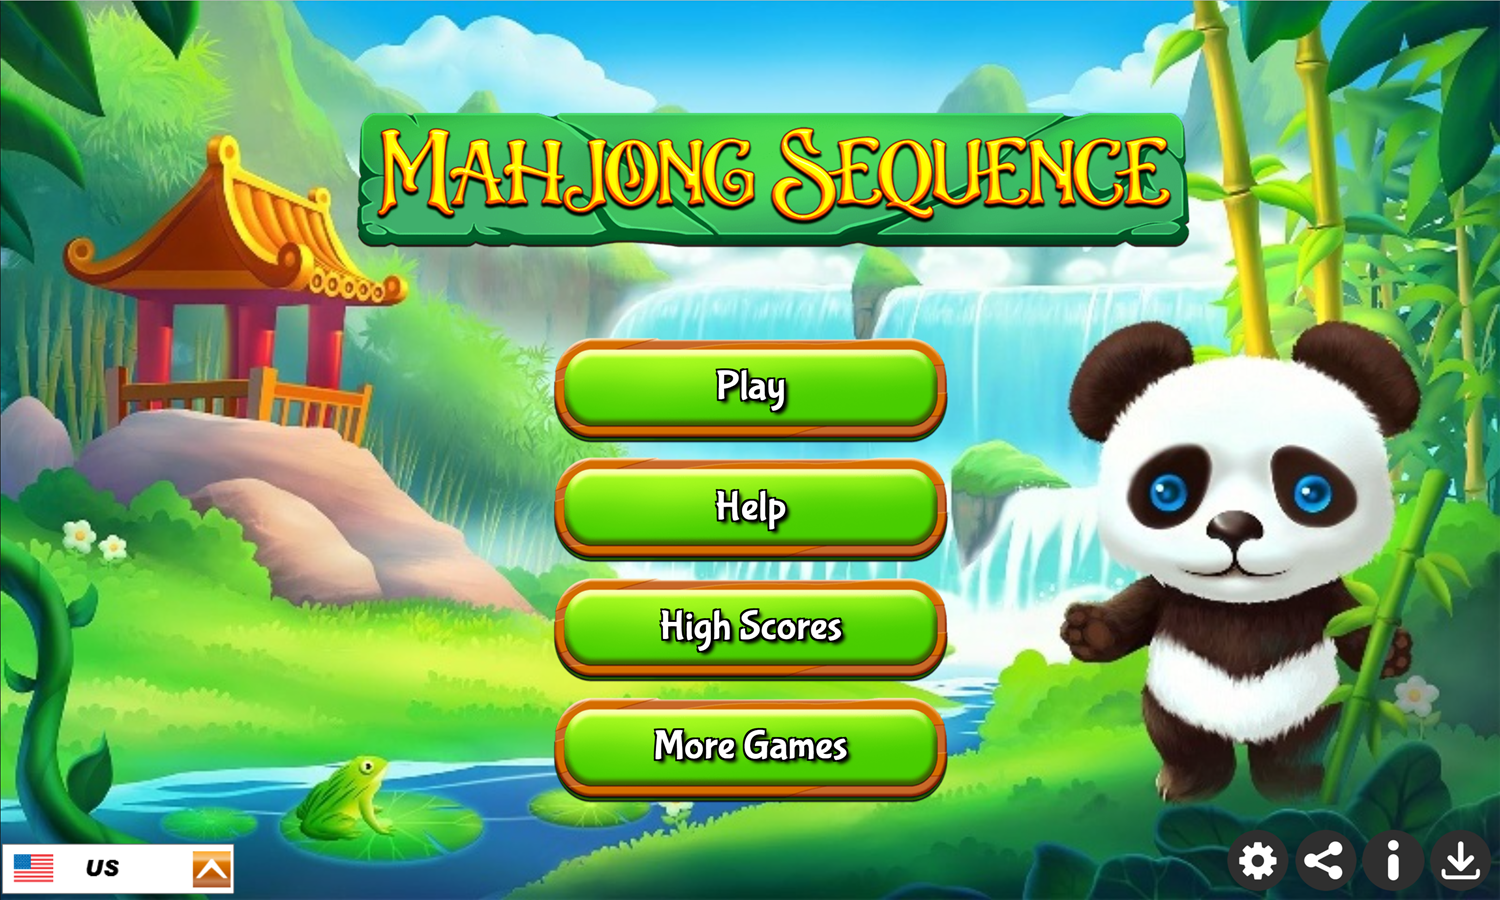 Mahjong Sequence Game Welcome Screen Screenshot.